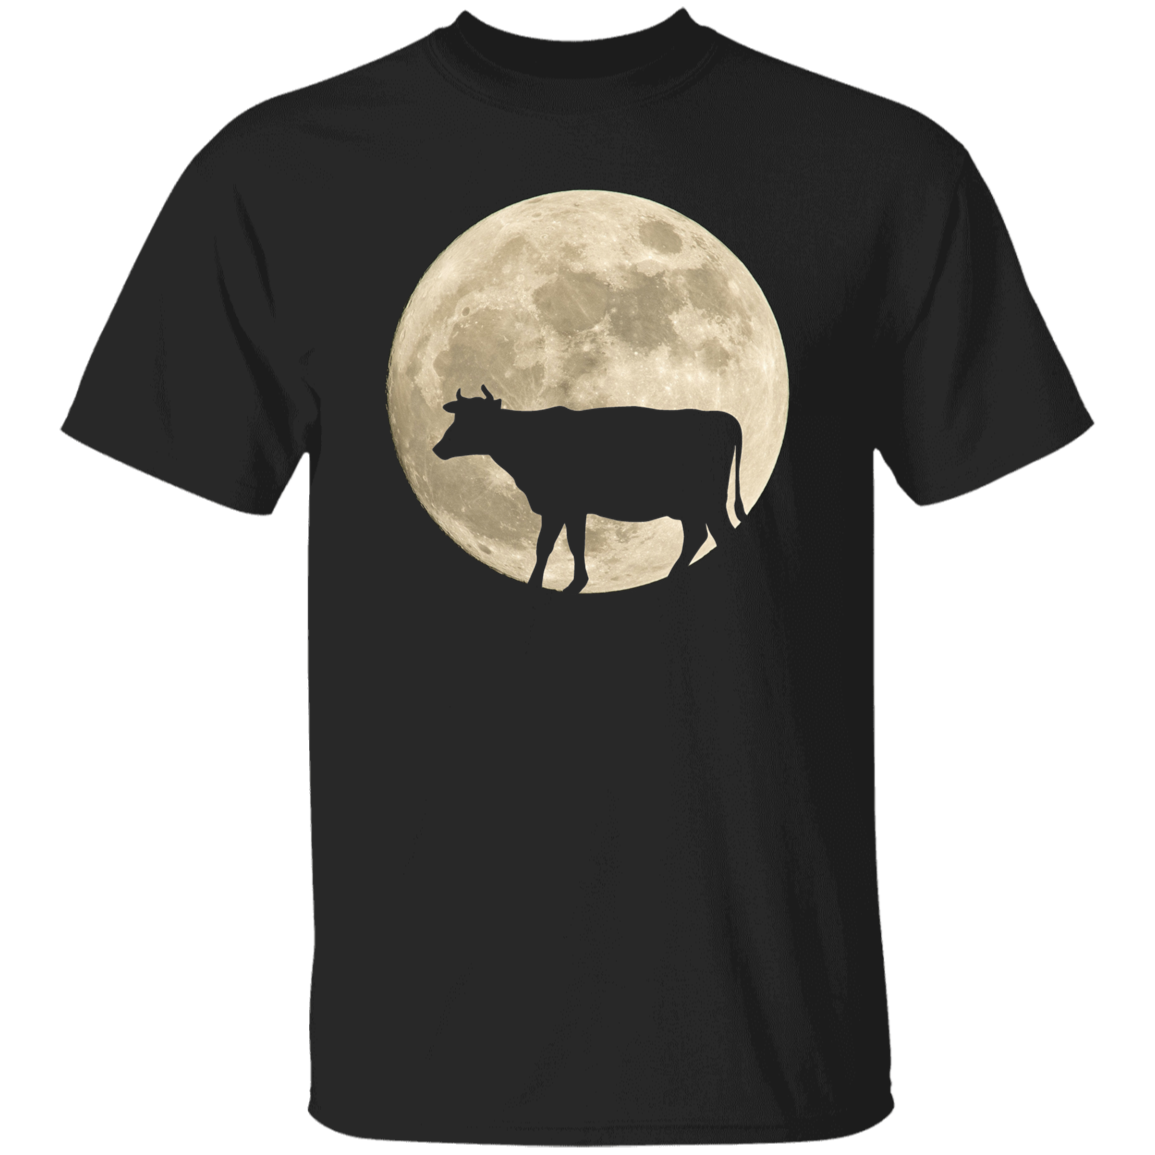 Cow Moon - T-shirts, Hoodies and Sweatshirts